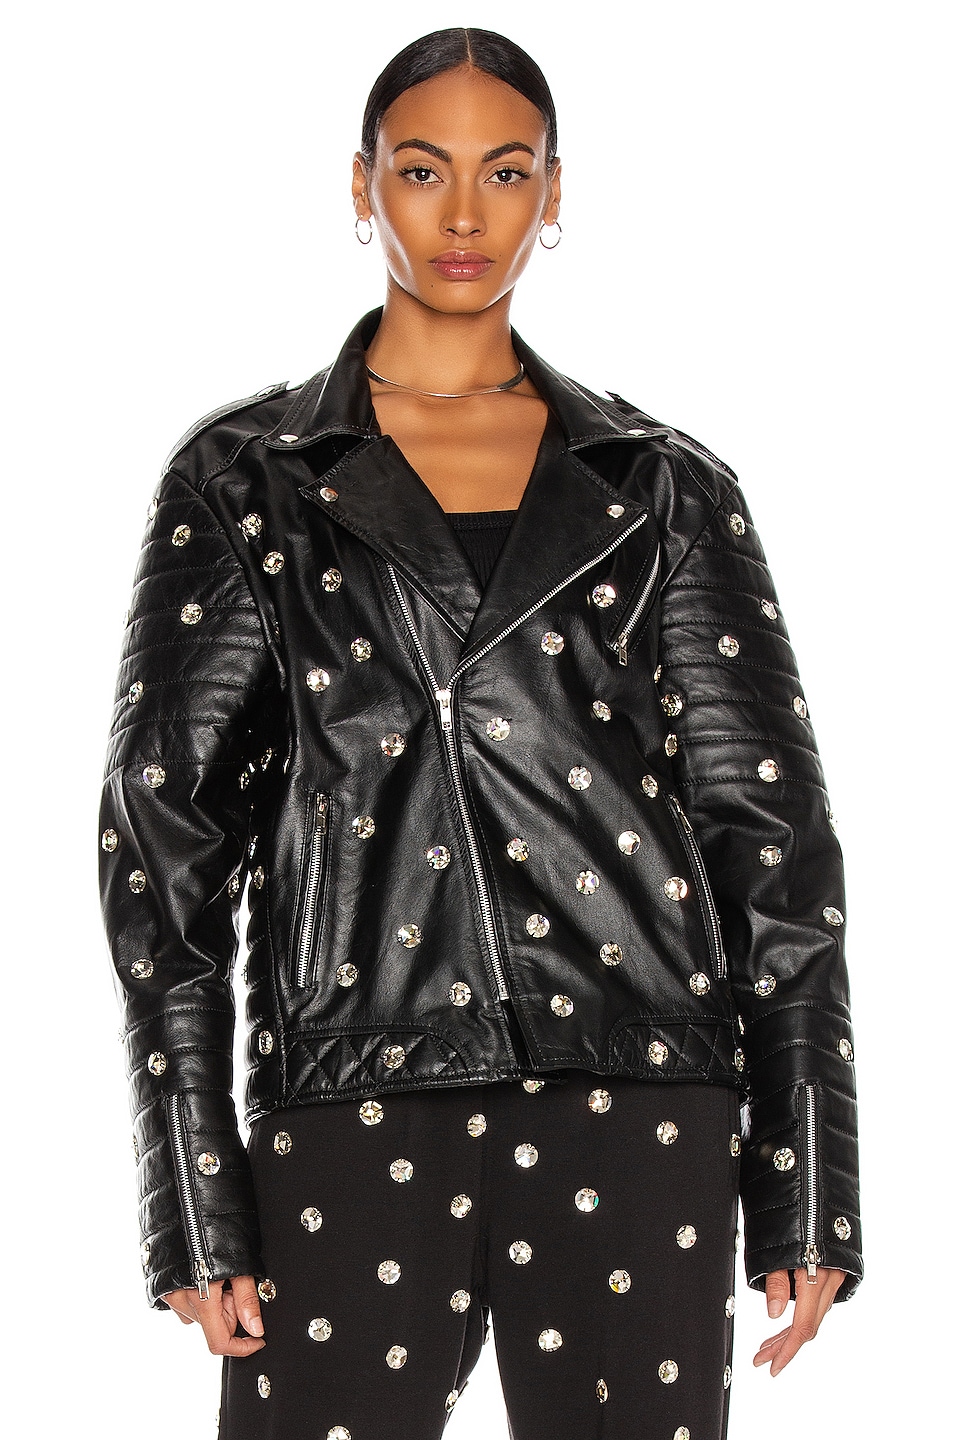 CHRISTIAN COWAN Leather and Swarovski Crystal Jacket in Black 1 | FWRD